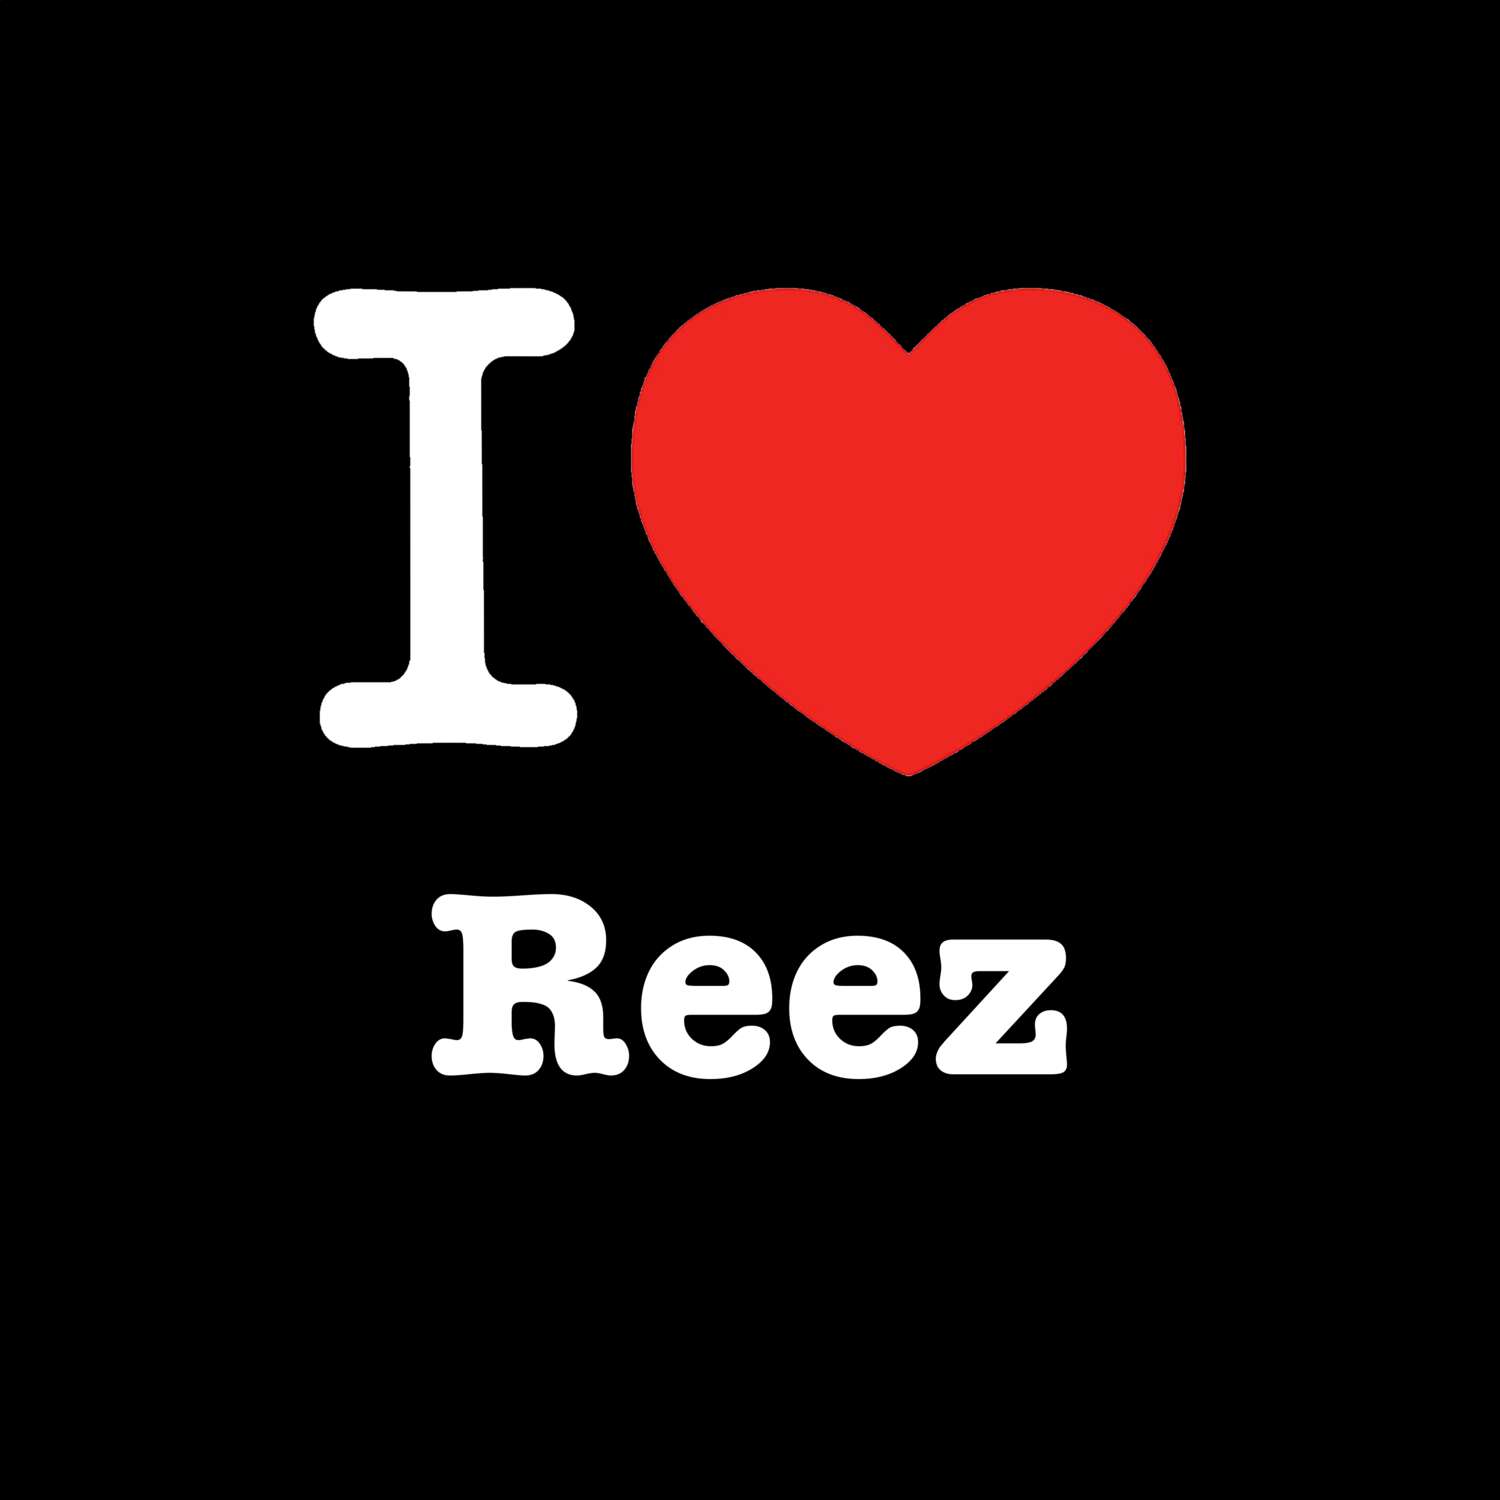 Reez T-Shirt »I love«